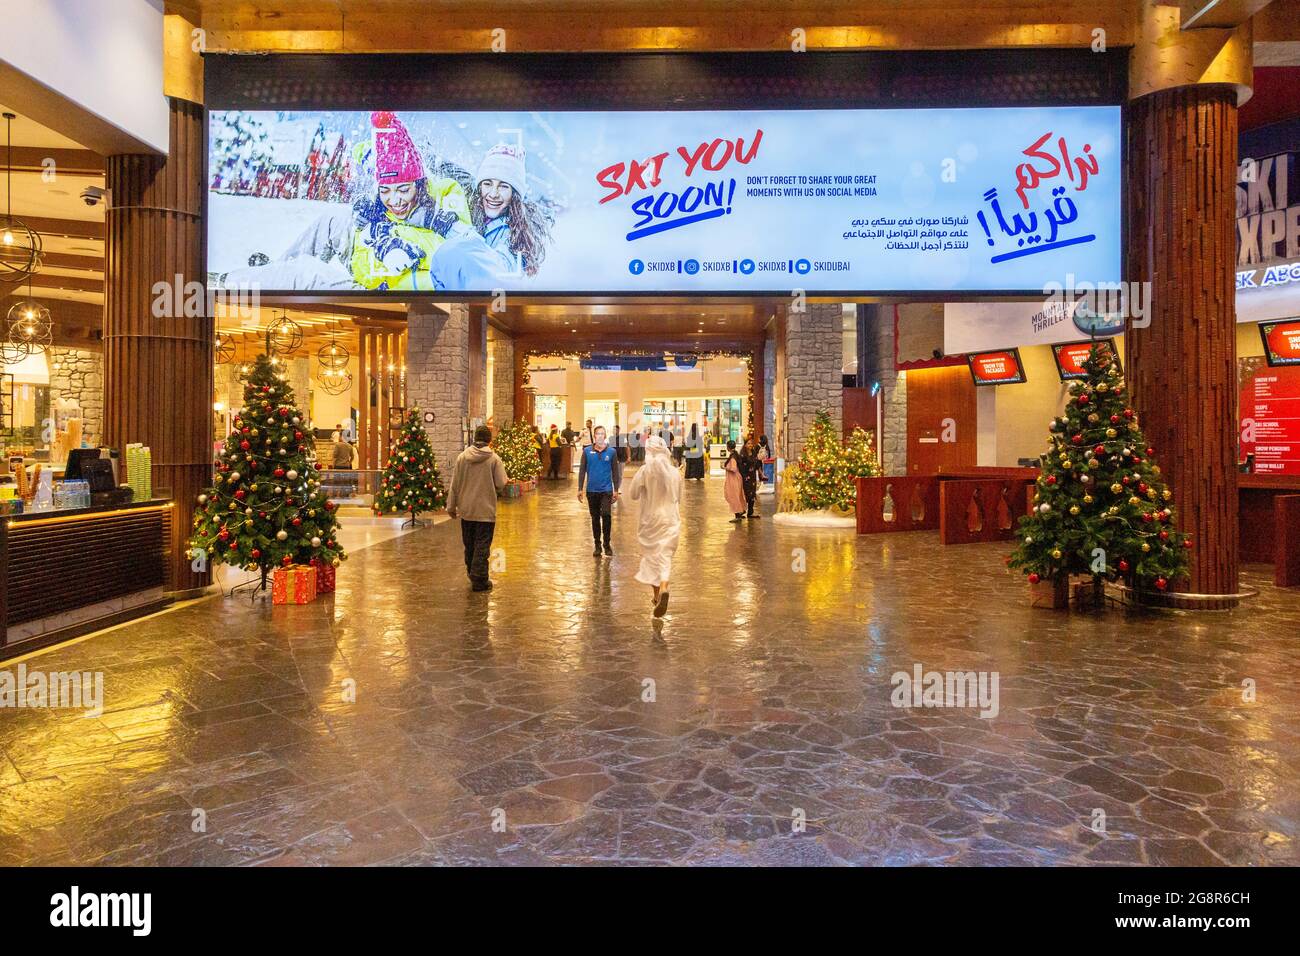 Lobby area at Ski Dubai, Mall of the Emirates, Dubai, UAE. --- Ski Dubai is an indoor ski resort with 22,500 square meters of indoor ski area. The par Stock Photo